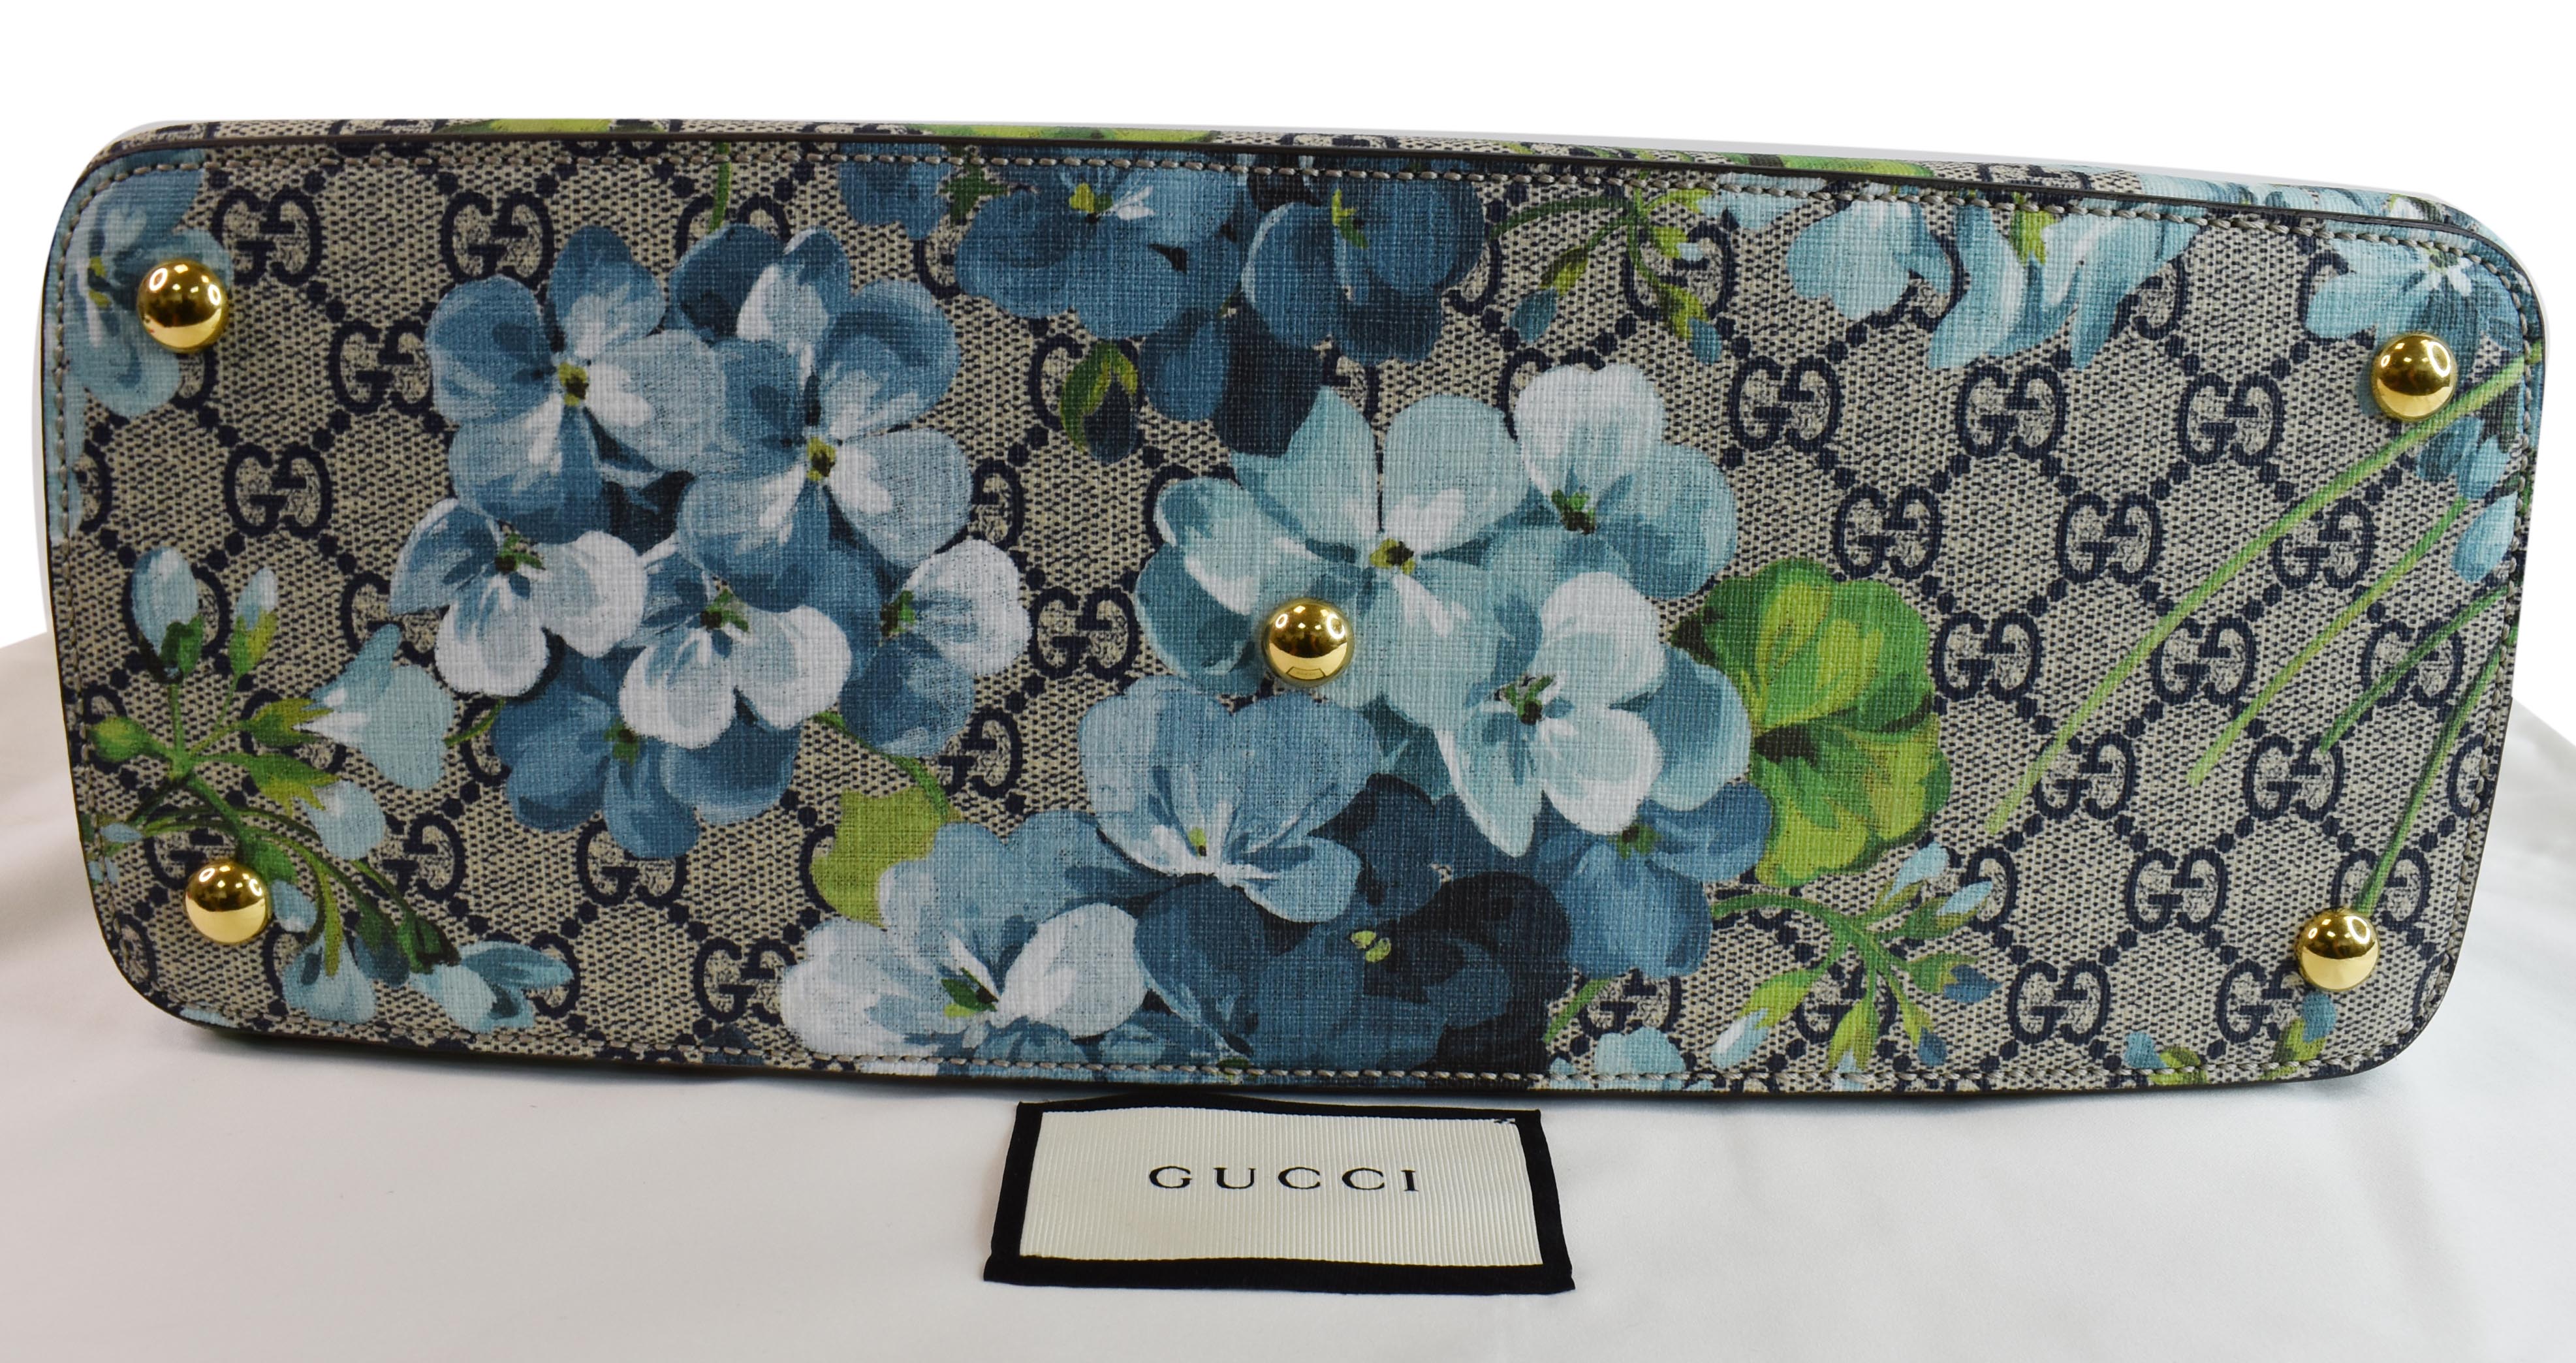 nomorecase on X: Gucci Lastest iPhone 7 Women Flower Leather